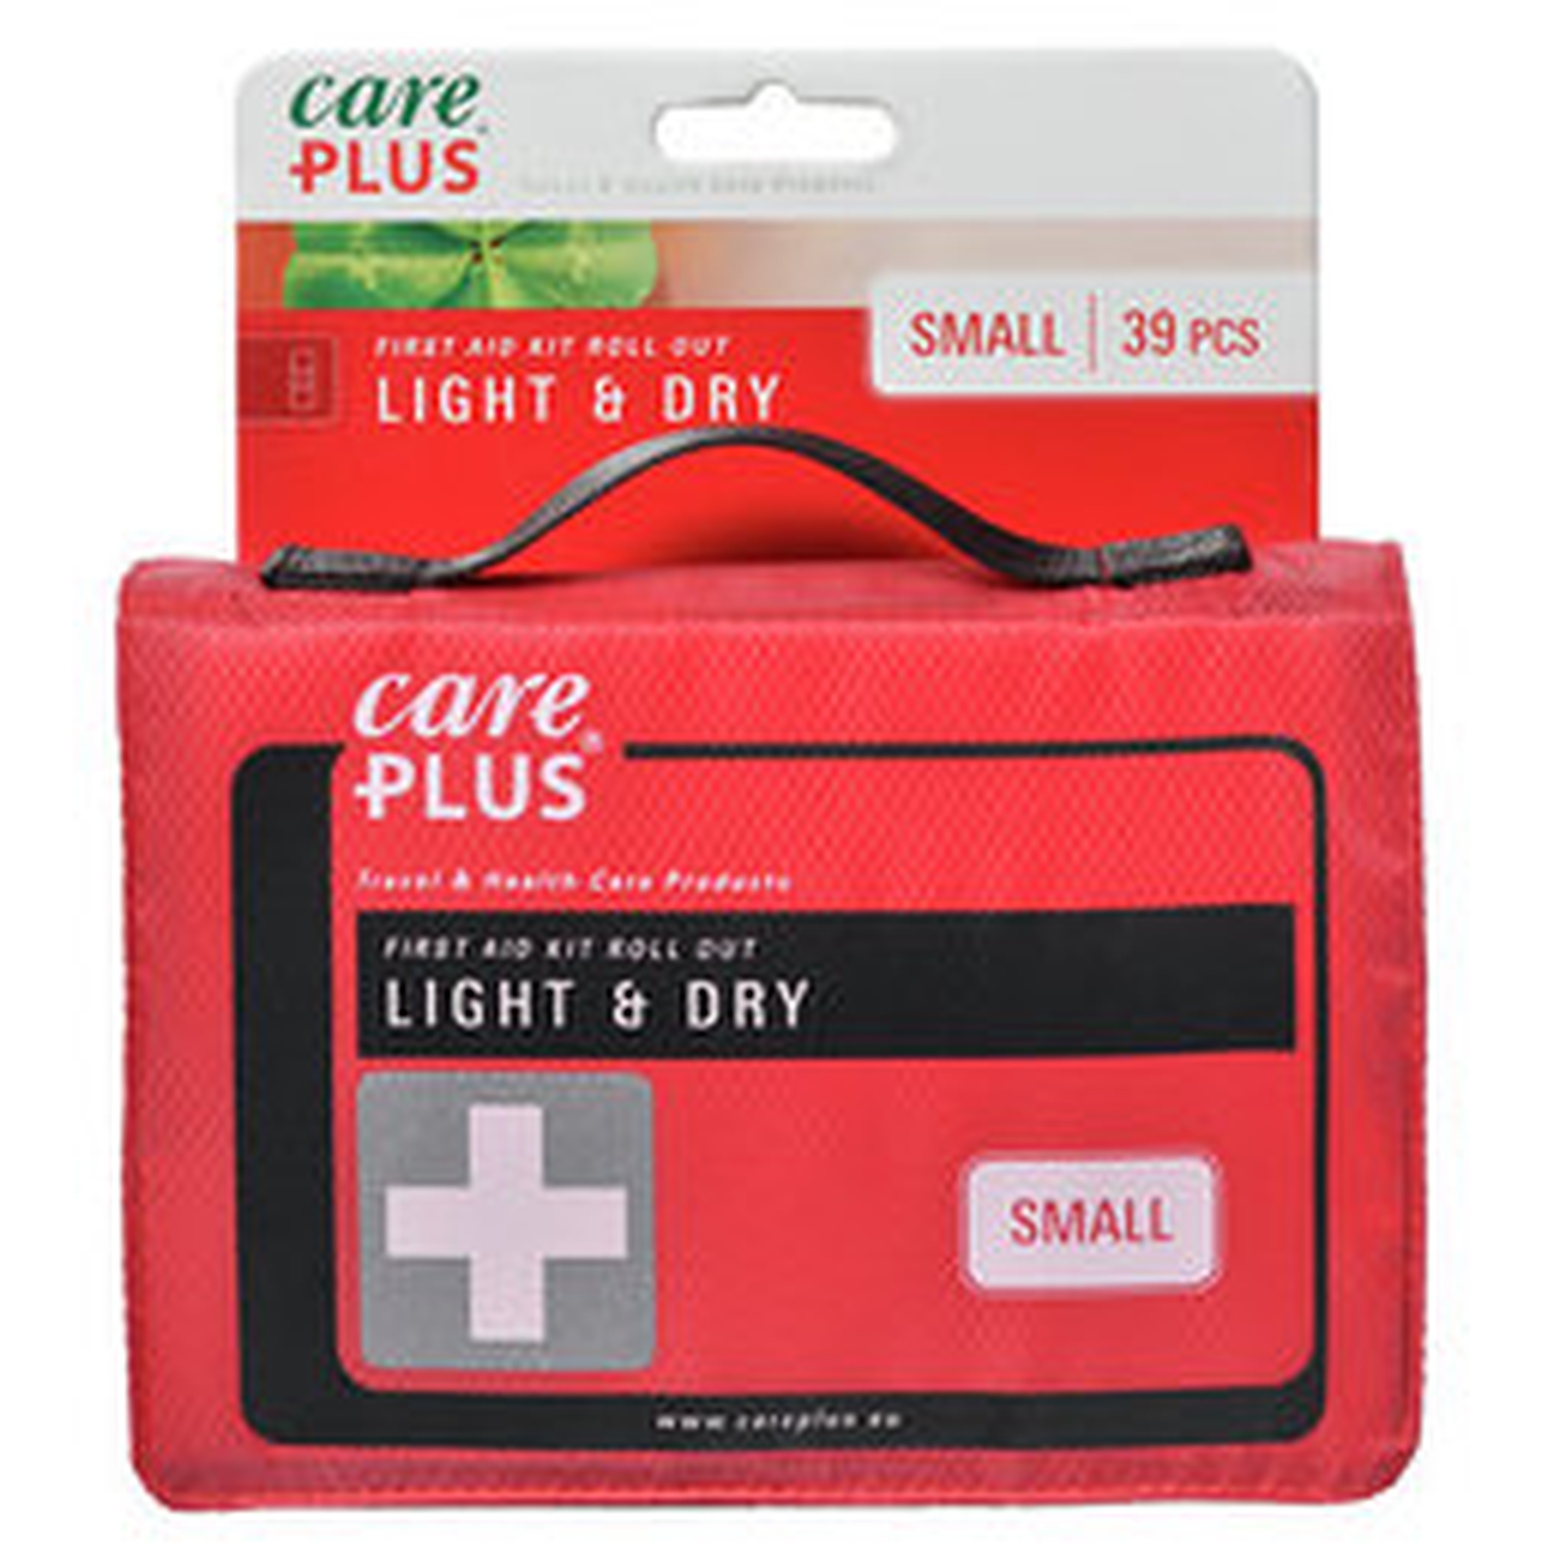 Bild von Care Plus Erste Hilfe Kit Roll Out - Light & Dry Small